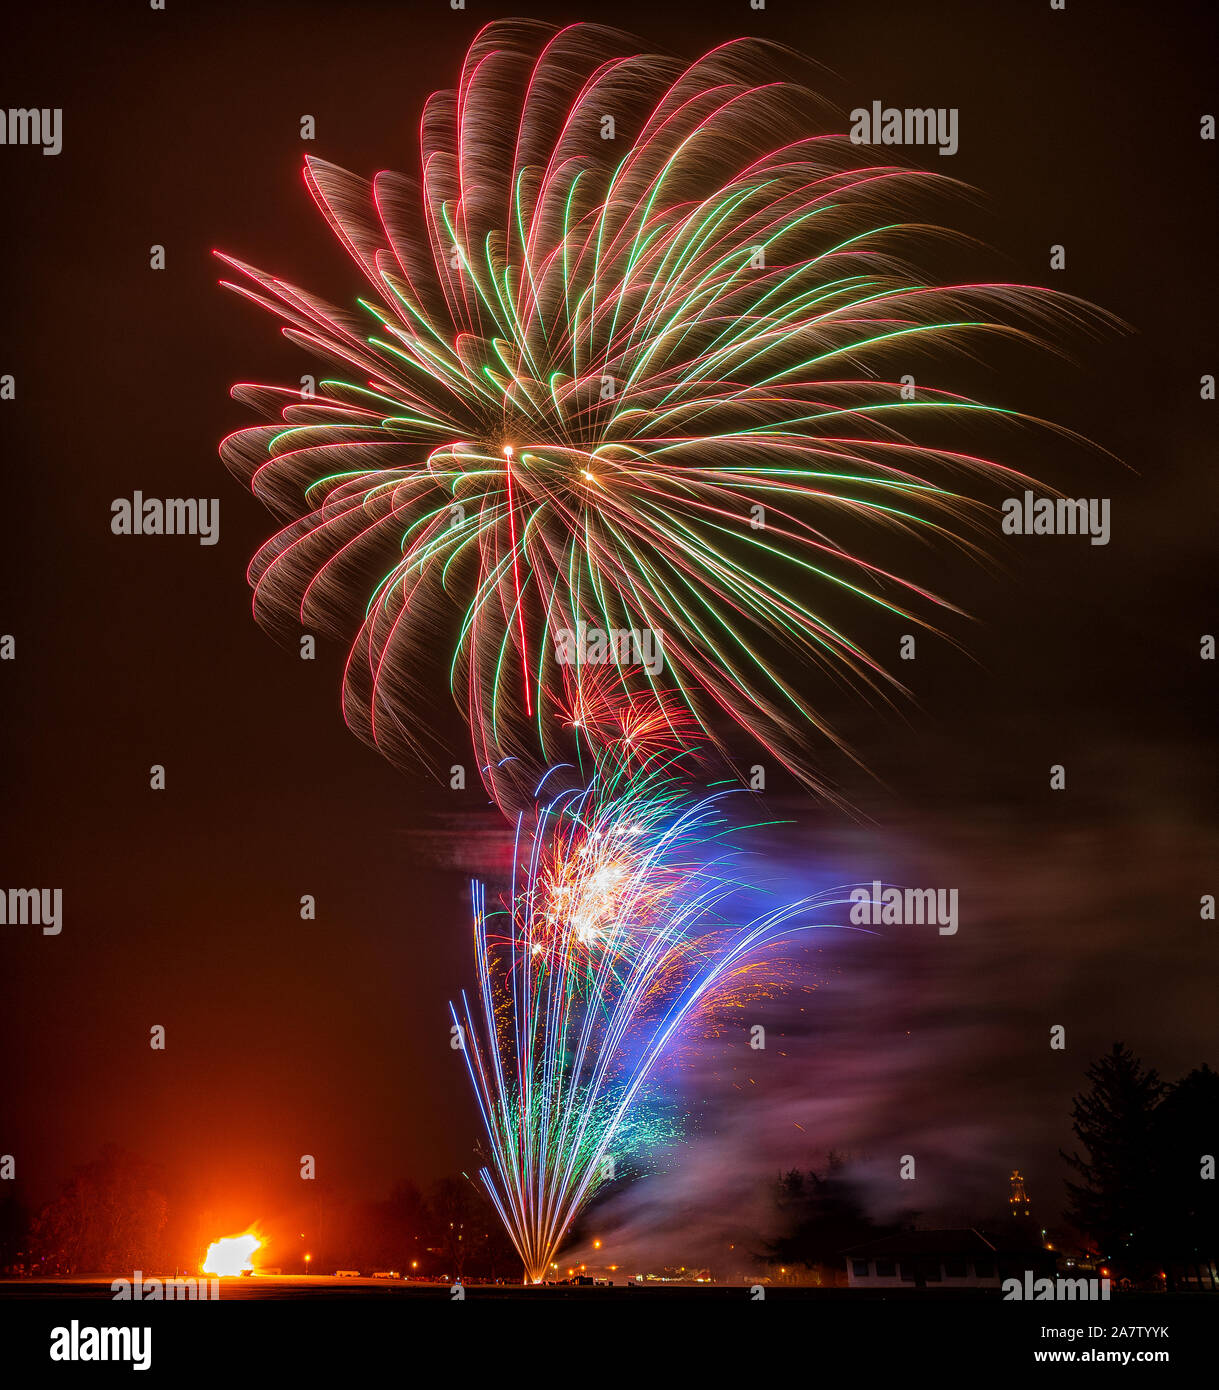 2 November 2019. Cooper park, Elgin, Moray, Scotland, UK. This is the Elgin Rotary Fireworks Display. Stock Photo